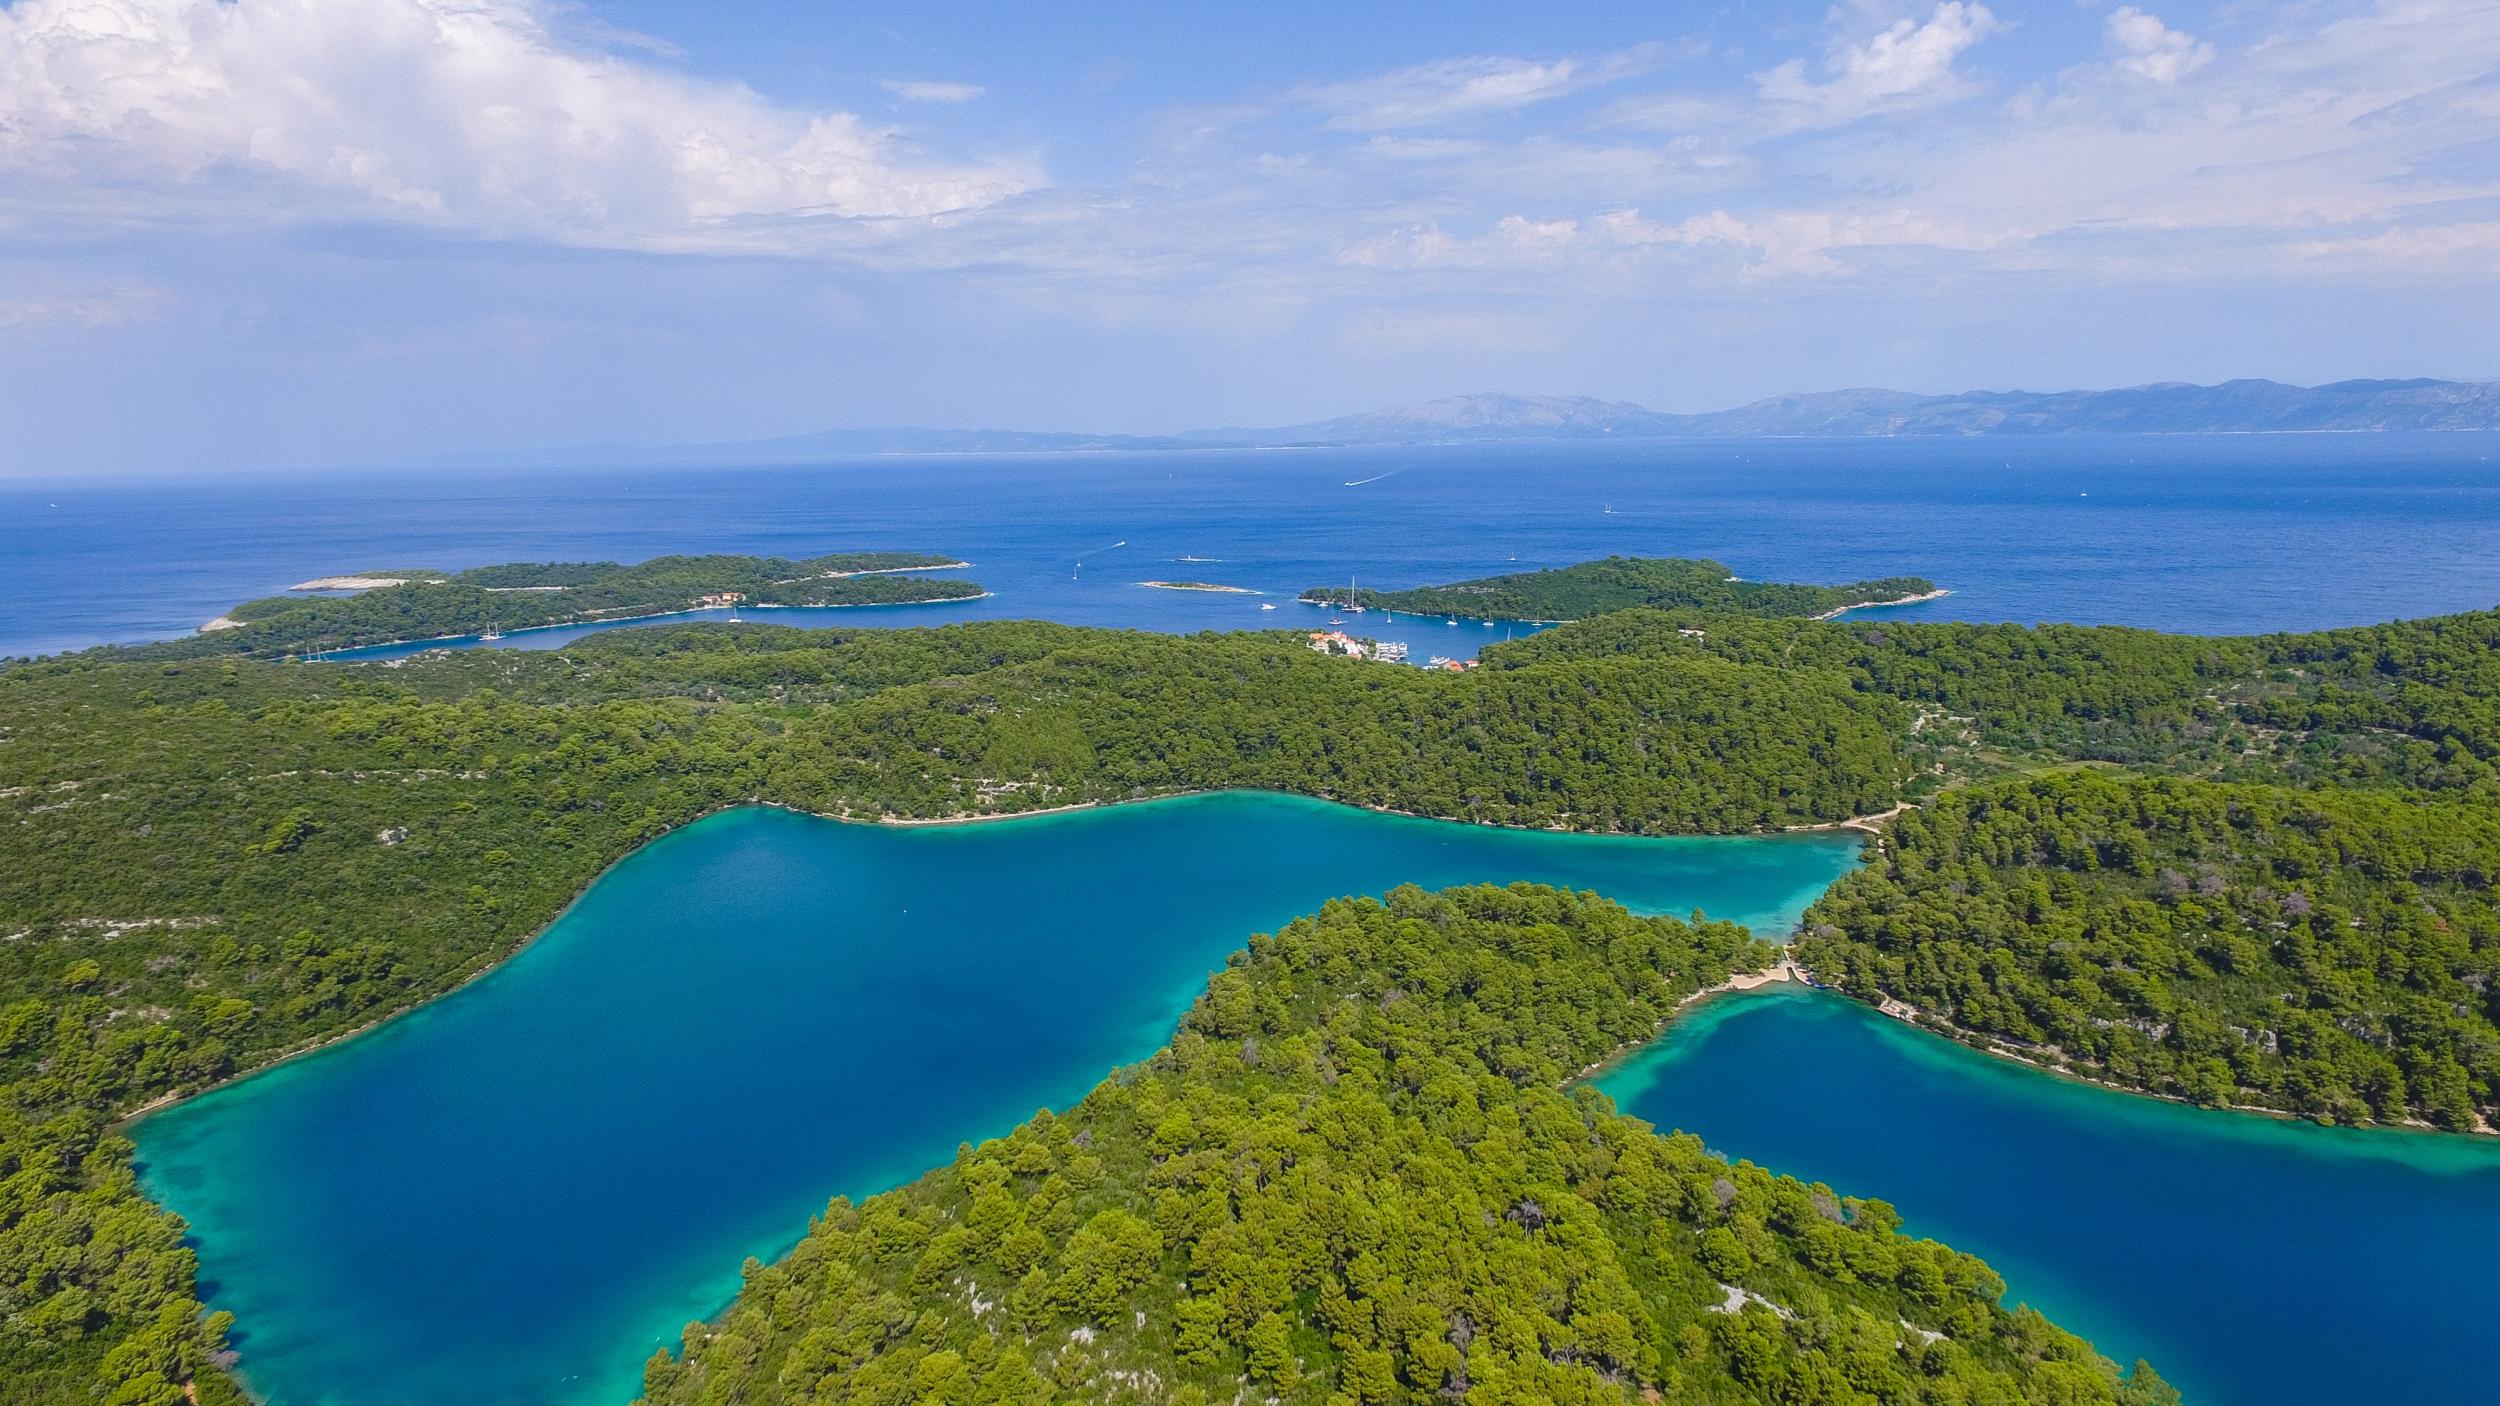 Mljet is one of Croatia's greenest islands